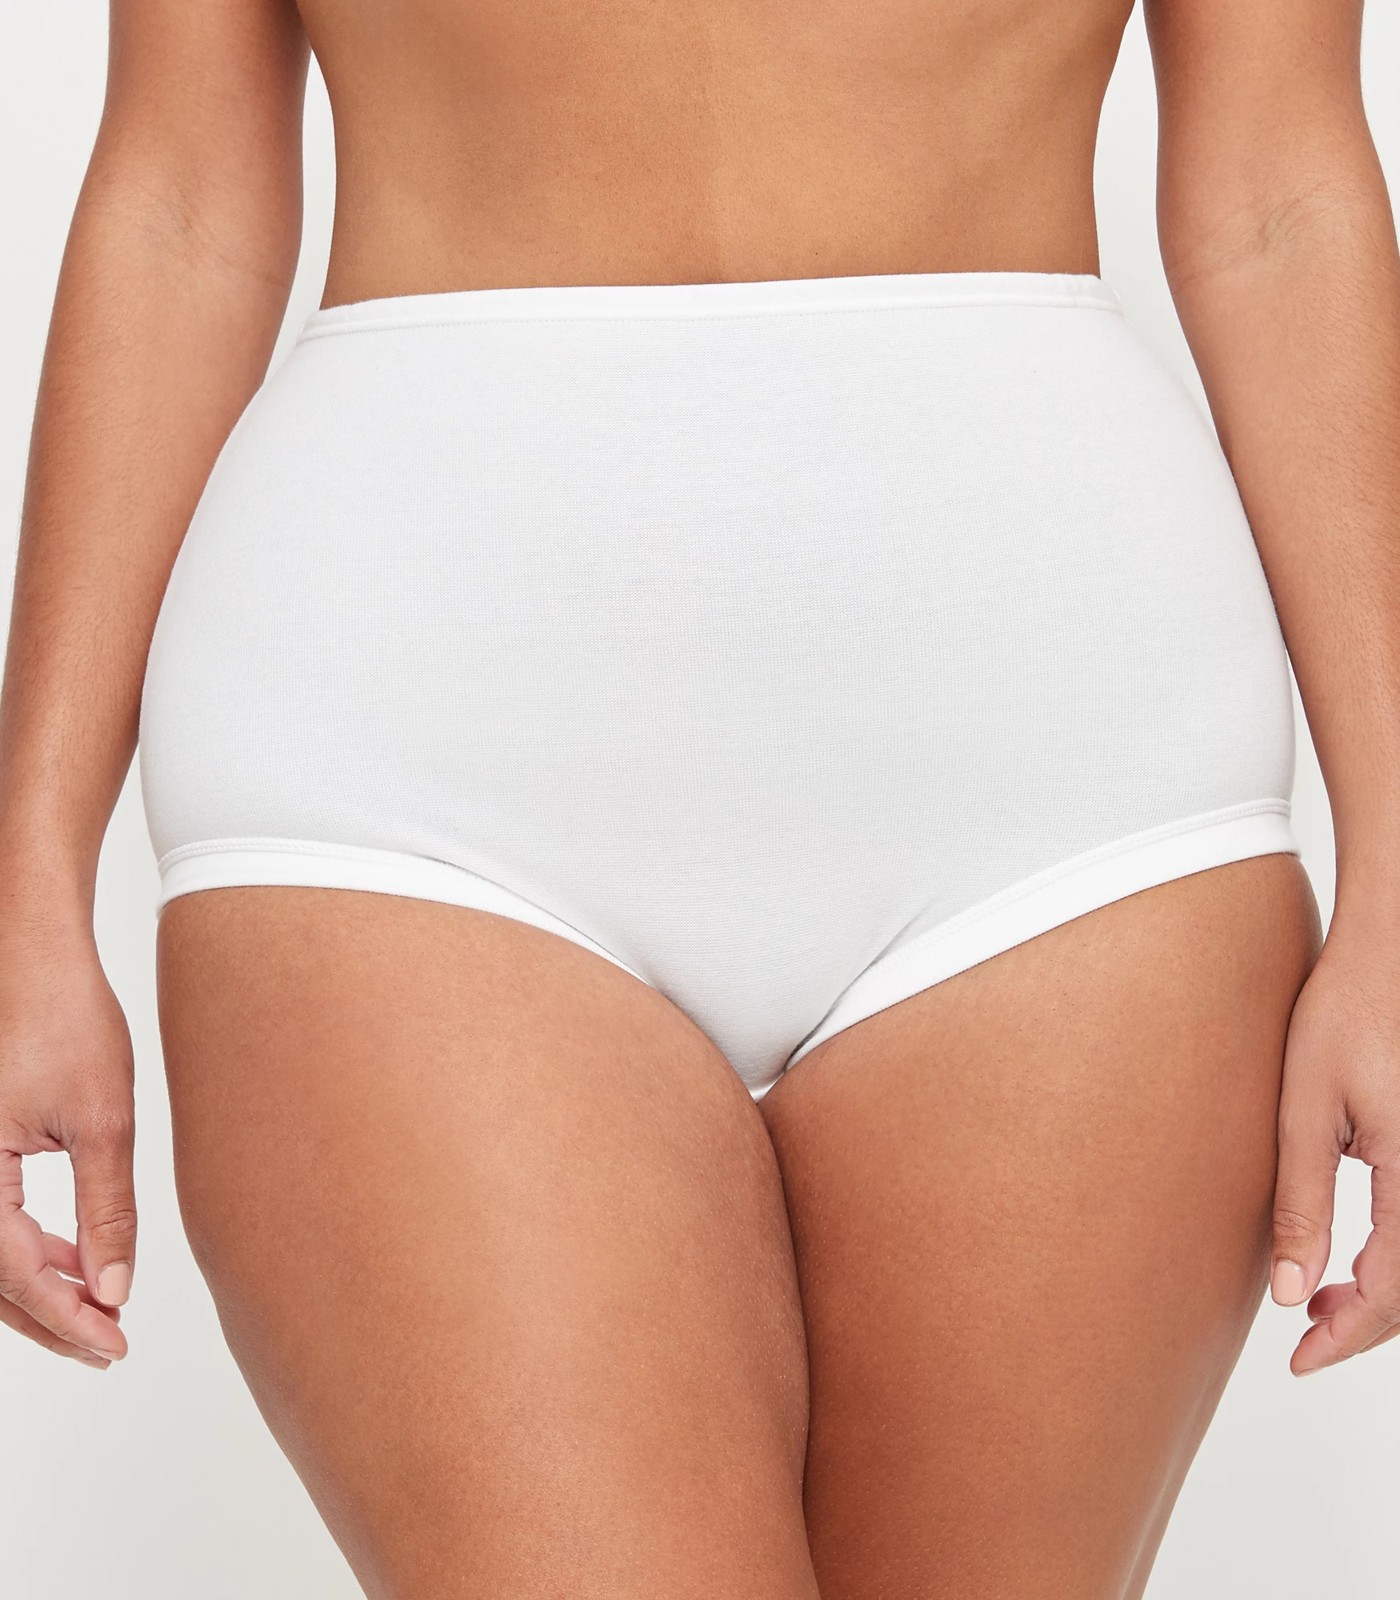 Bonds Womens Underwear Cottontails Size 22 2 pack